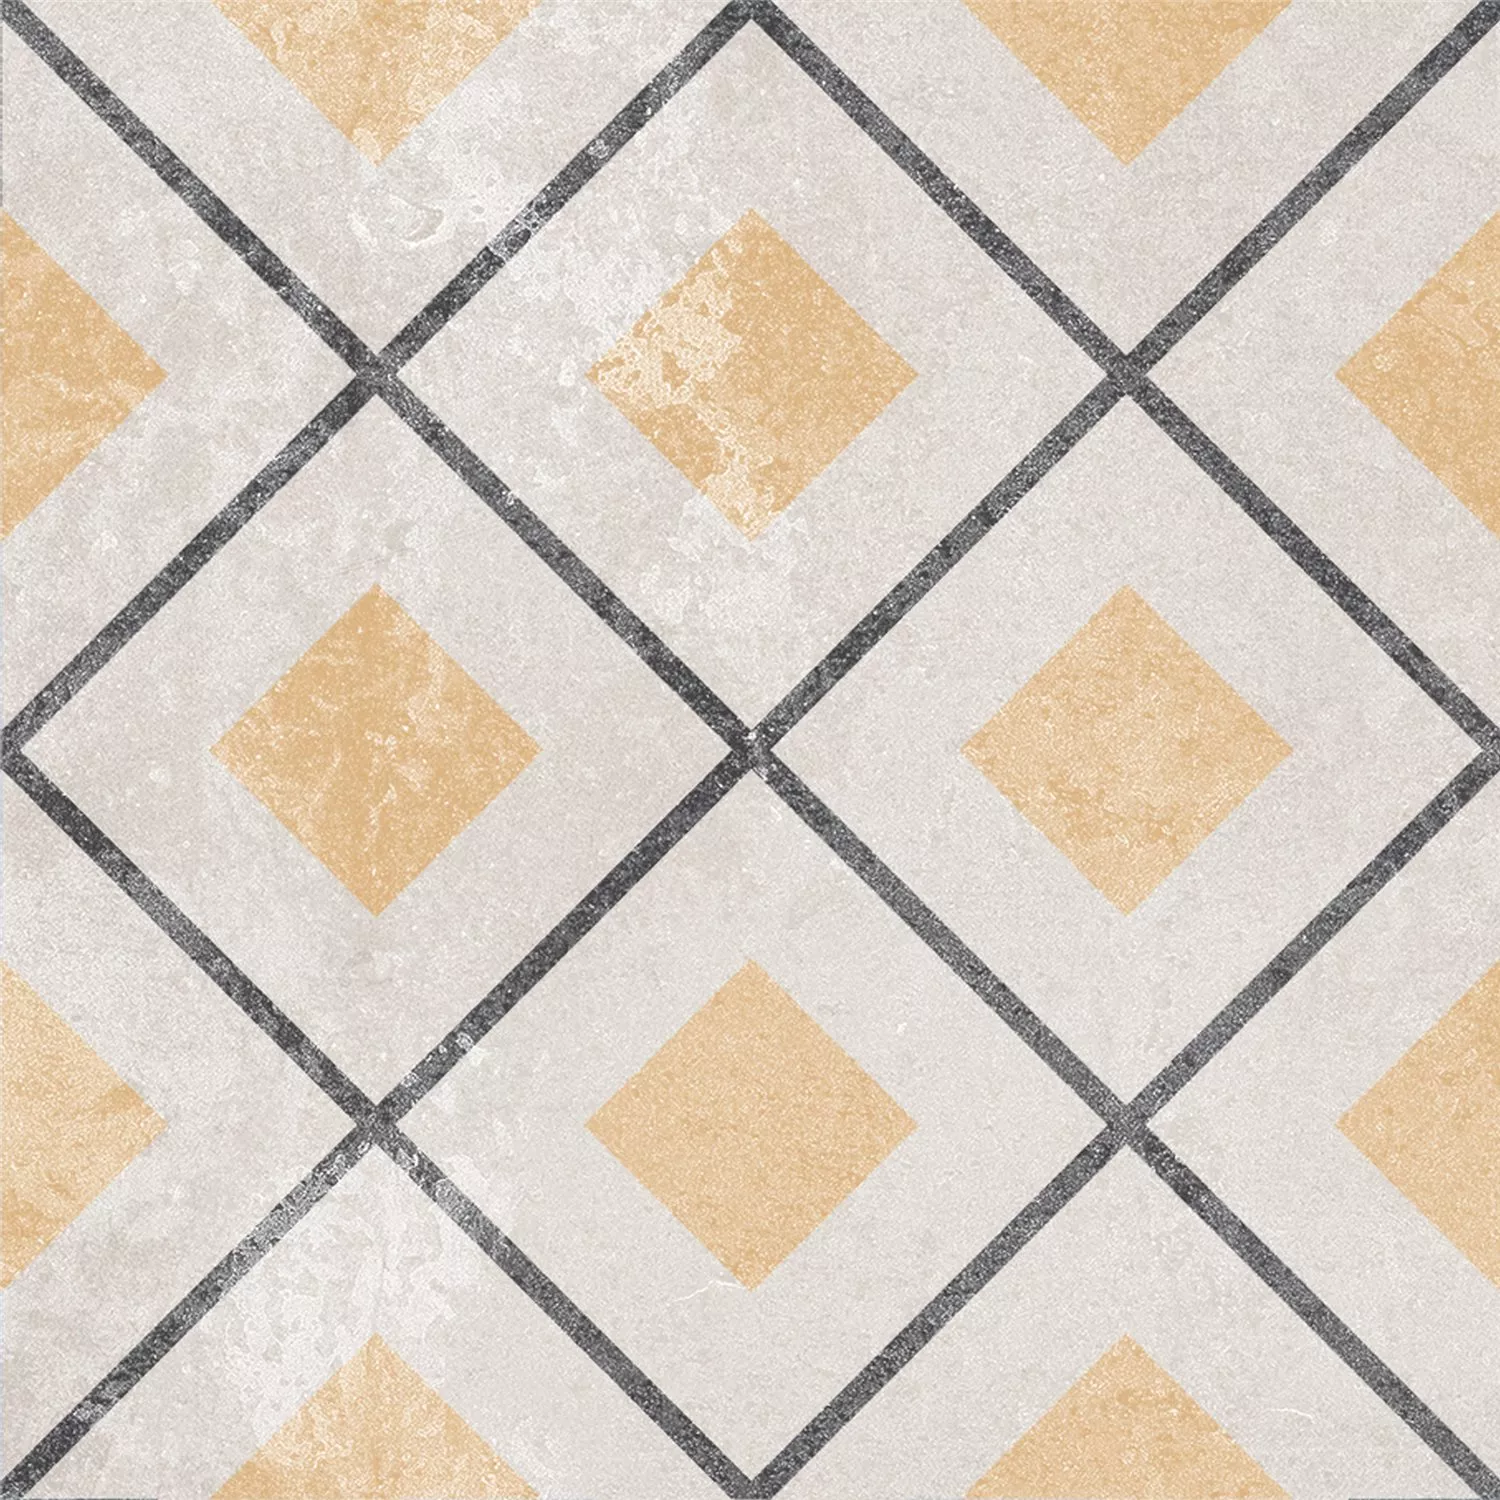 Sample Cement Tiles Retro Optic Gris Floor Tiles Cubero 18,6x18,6cm